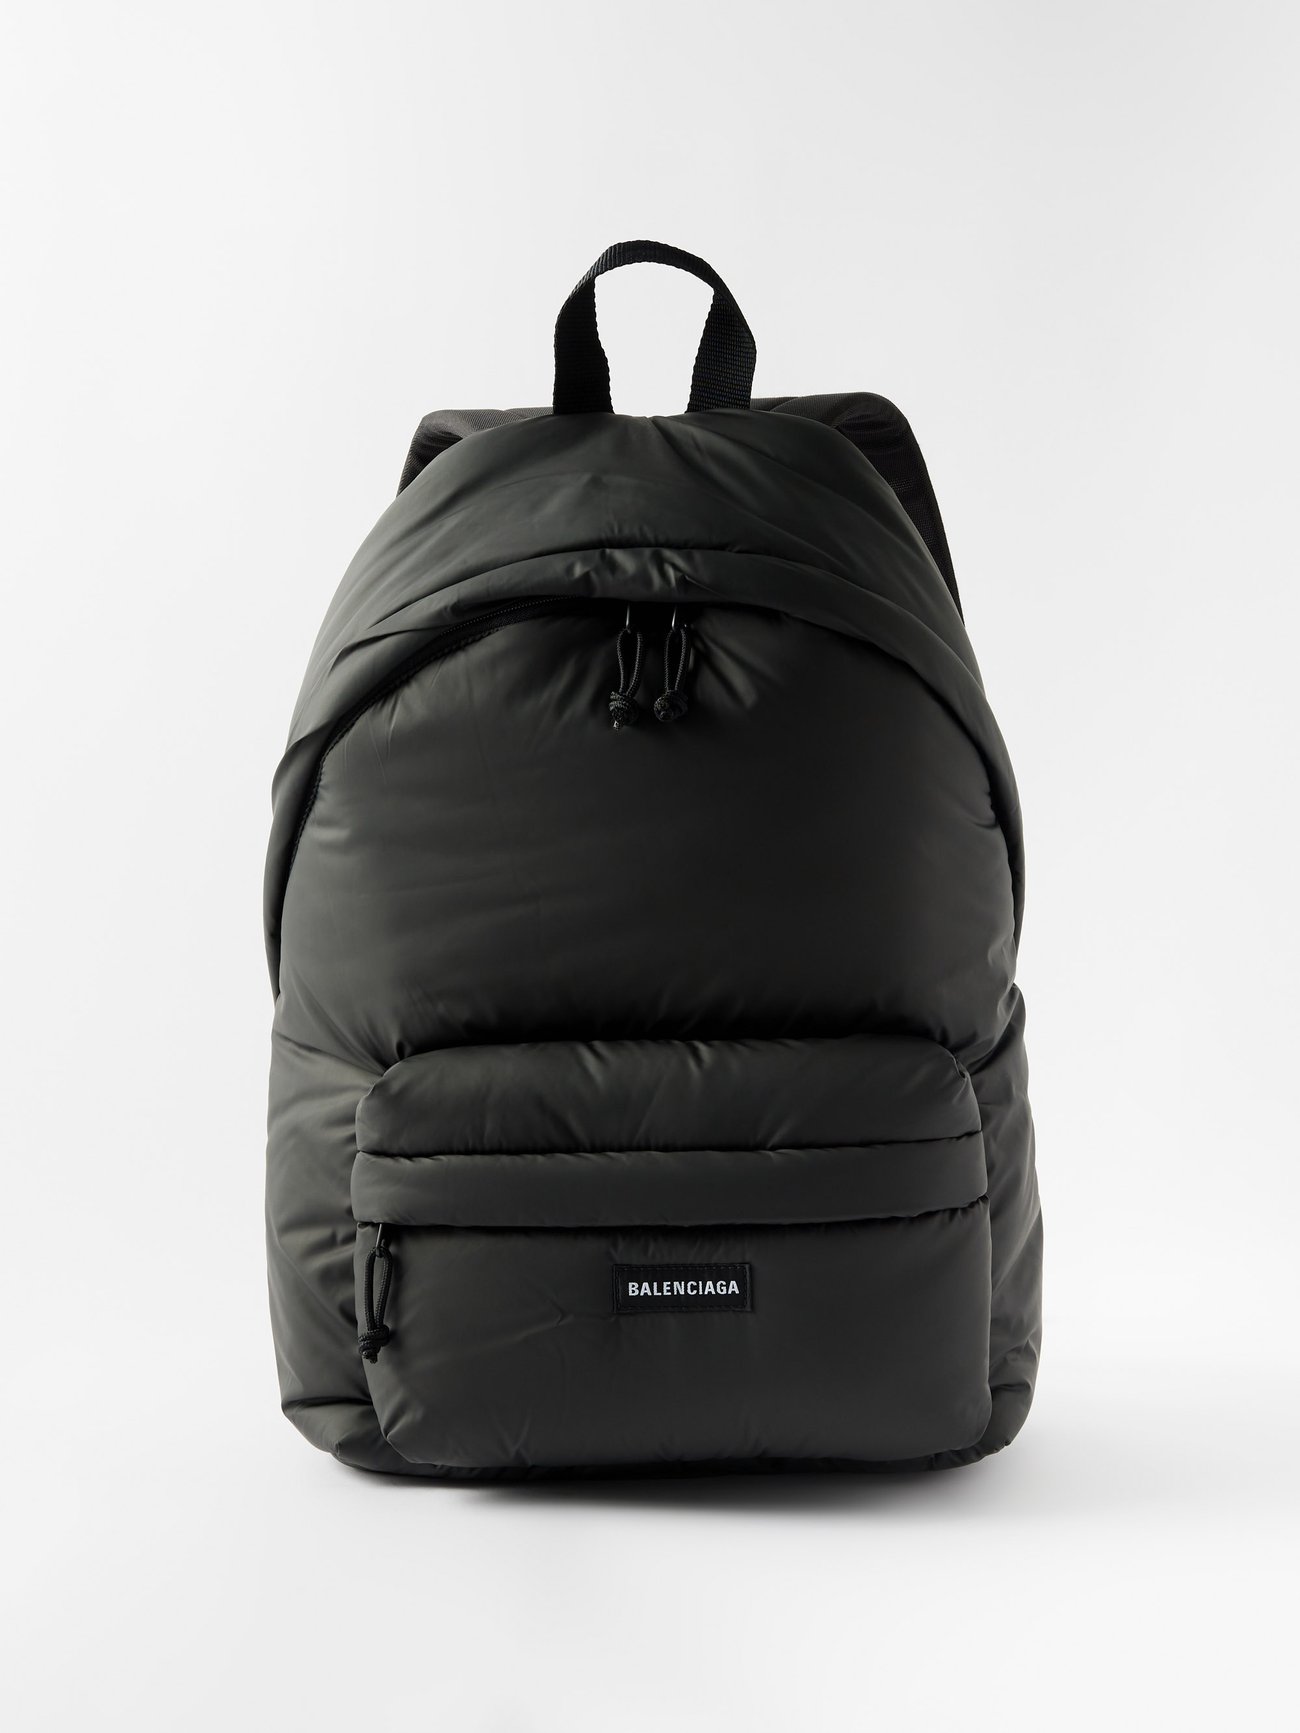 Black Explorer padded backpack, Balenciaga